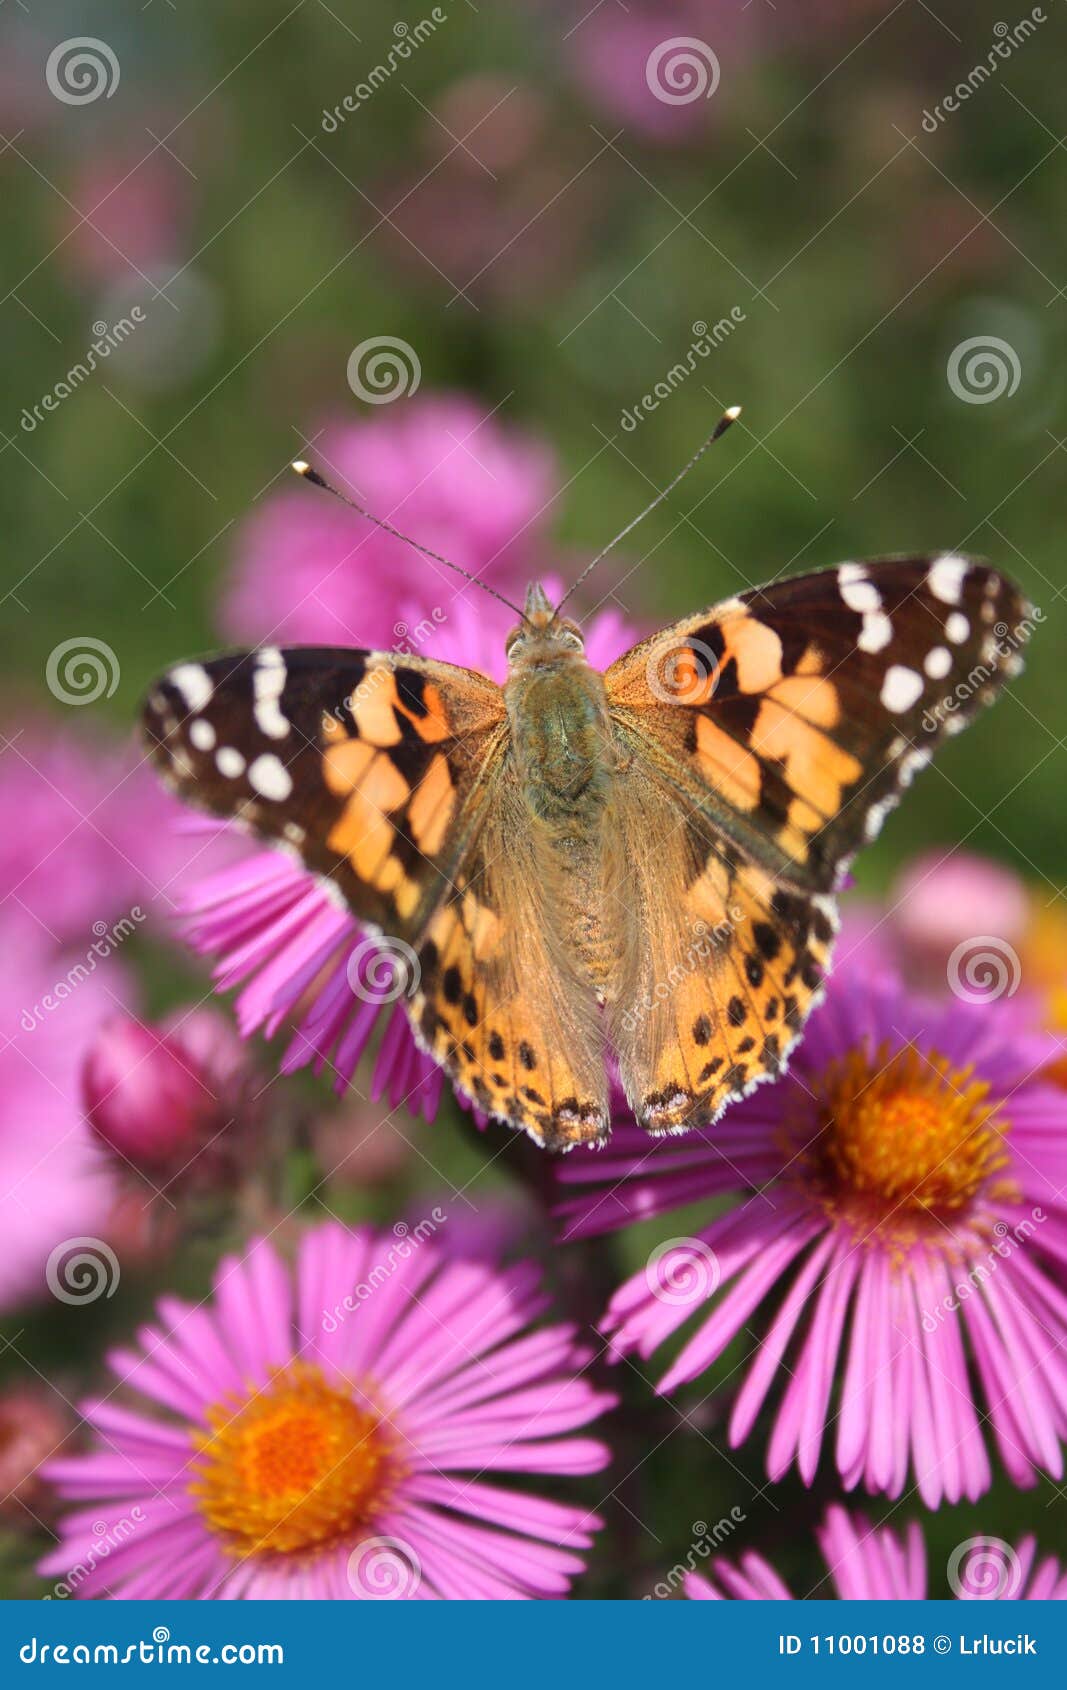 Butterfly stock photo. Image of wings, feelers, butterflies - 11001088